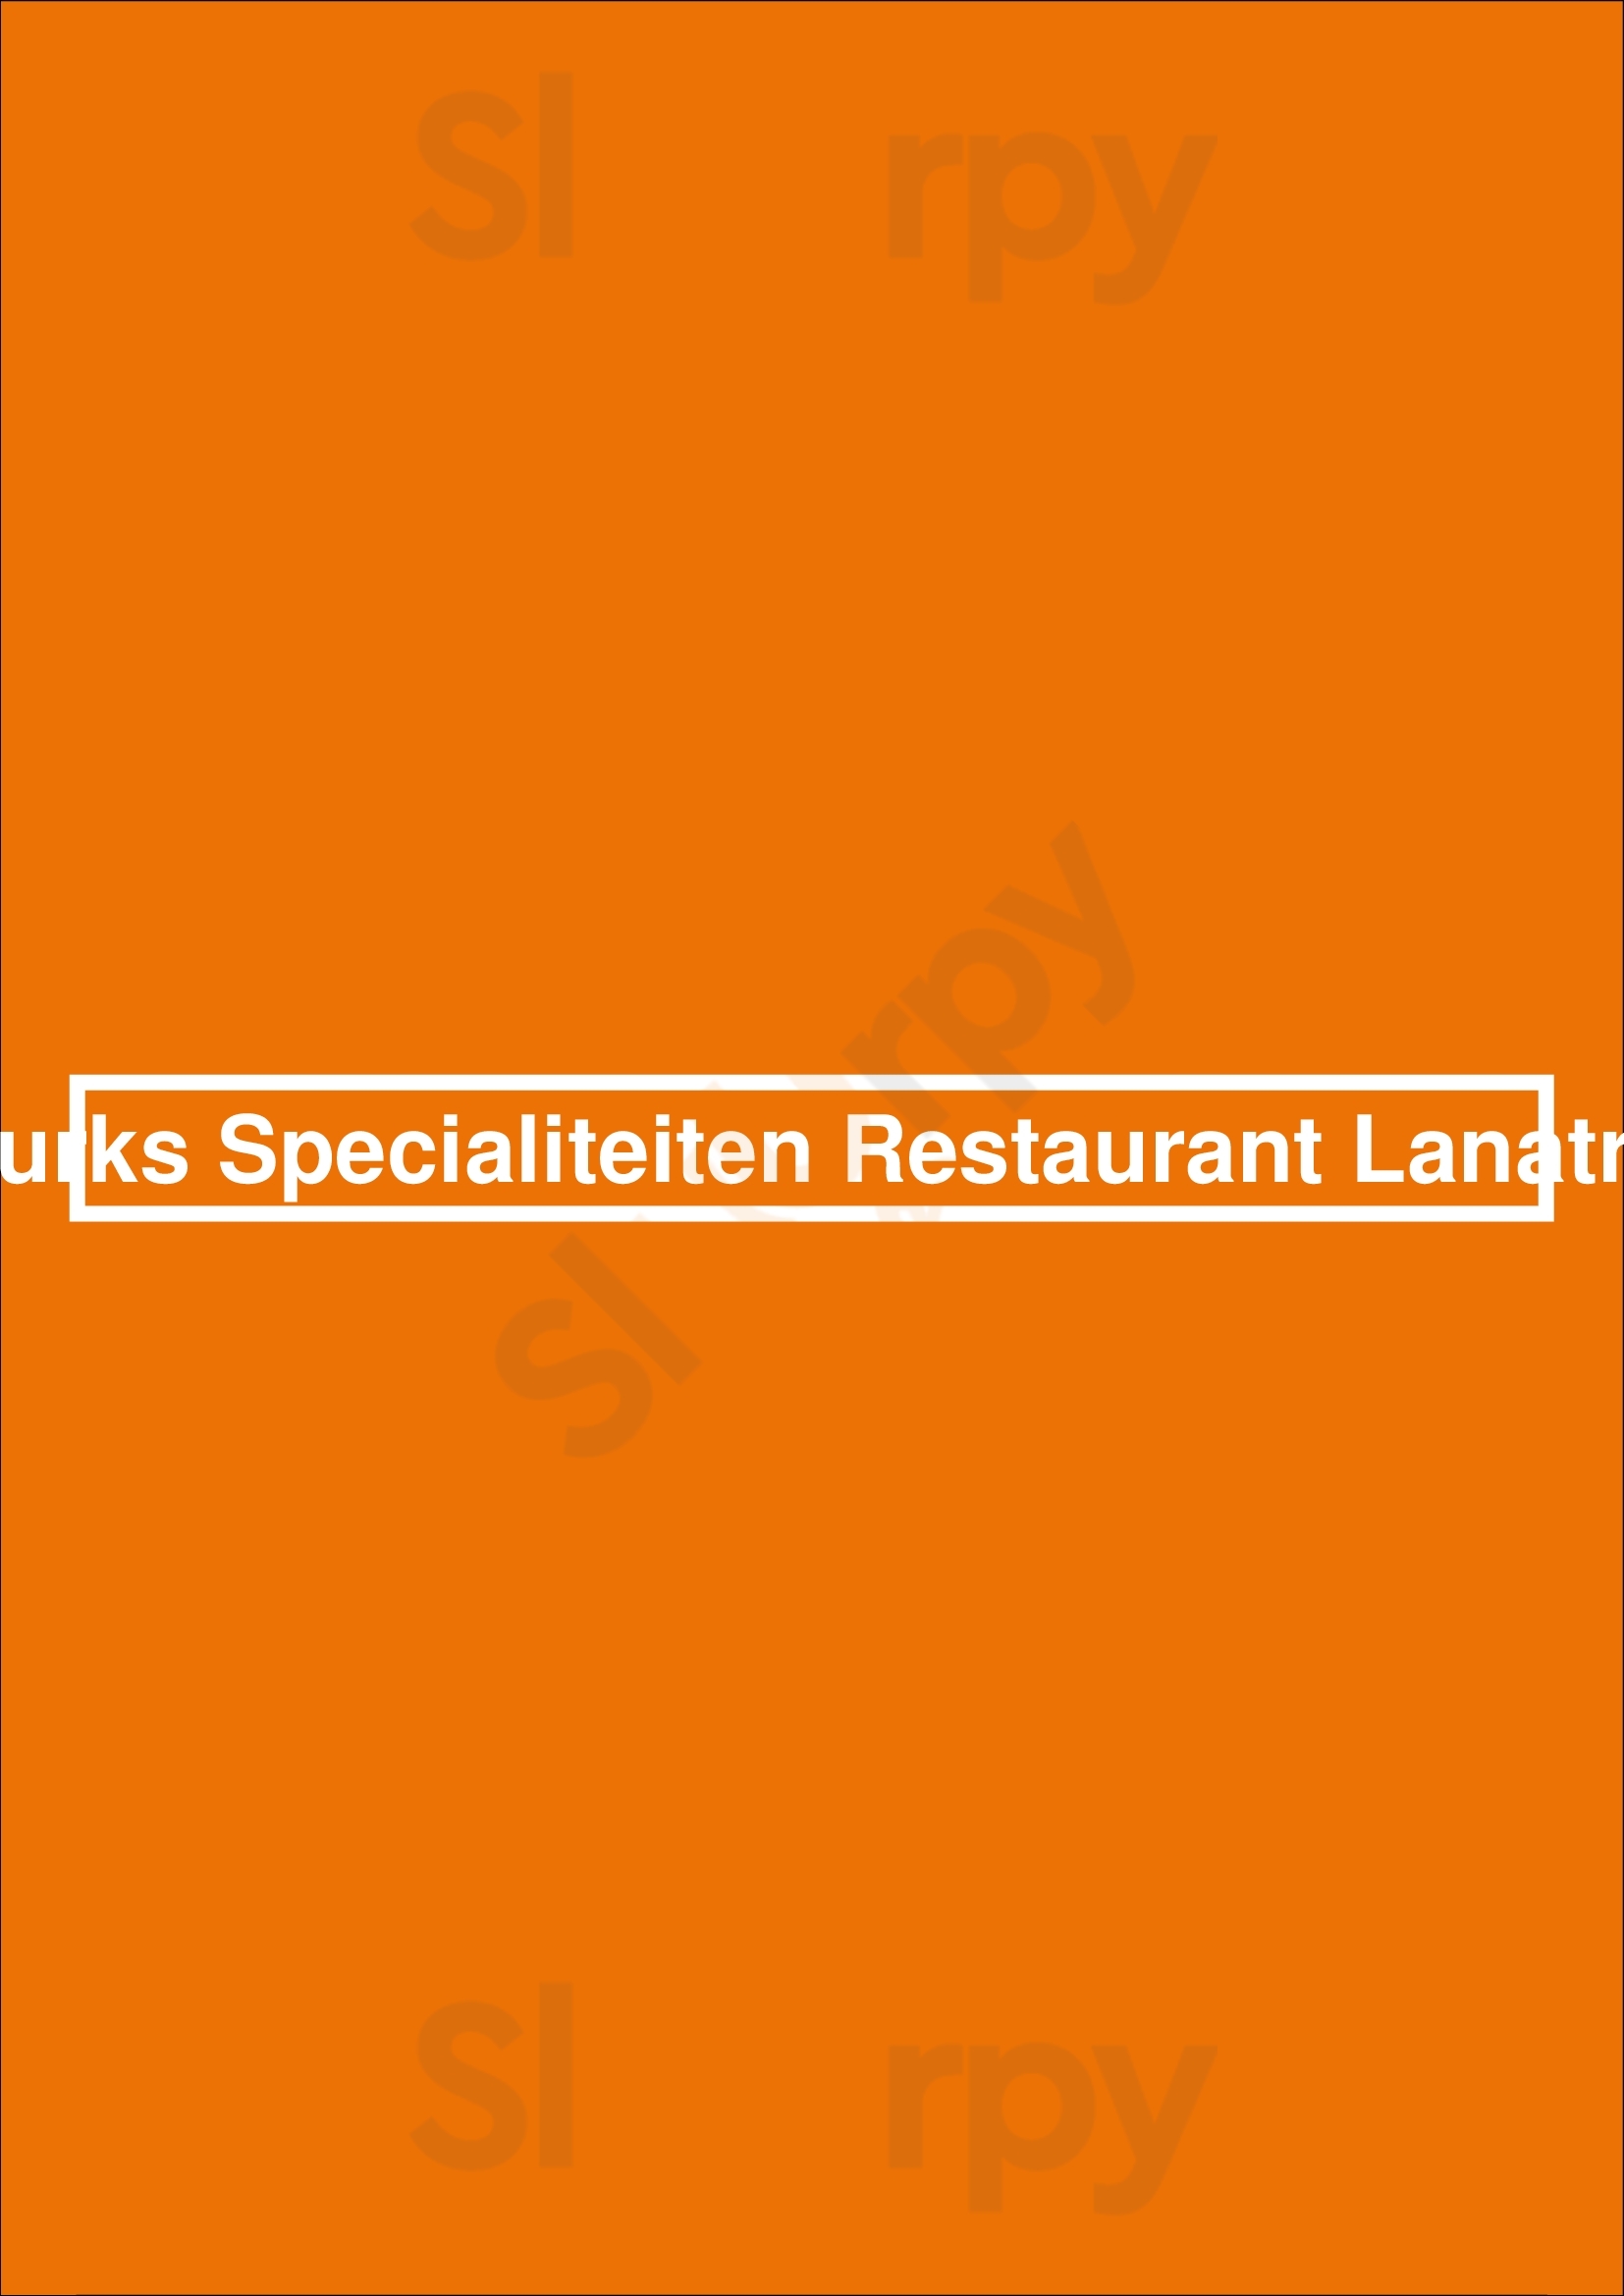 Turks Specialiteiten Restaurant Lanatra Breda Menu - 1